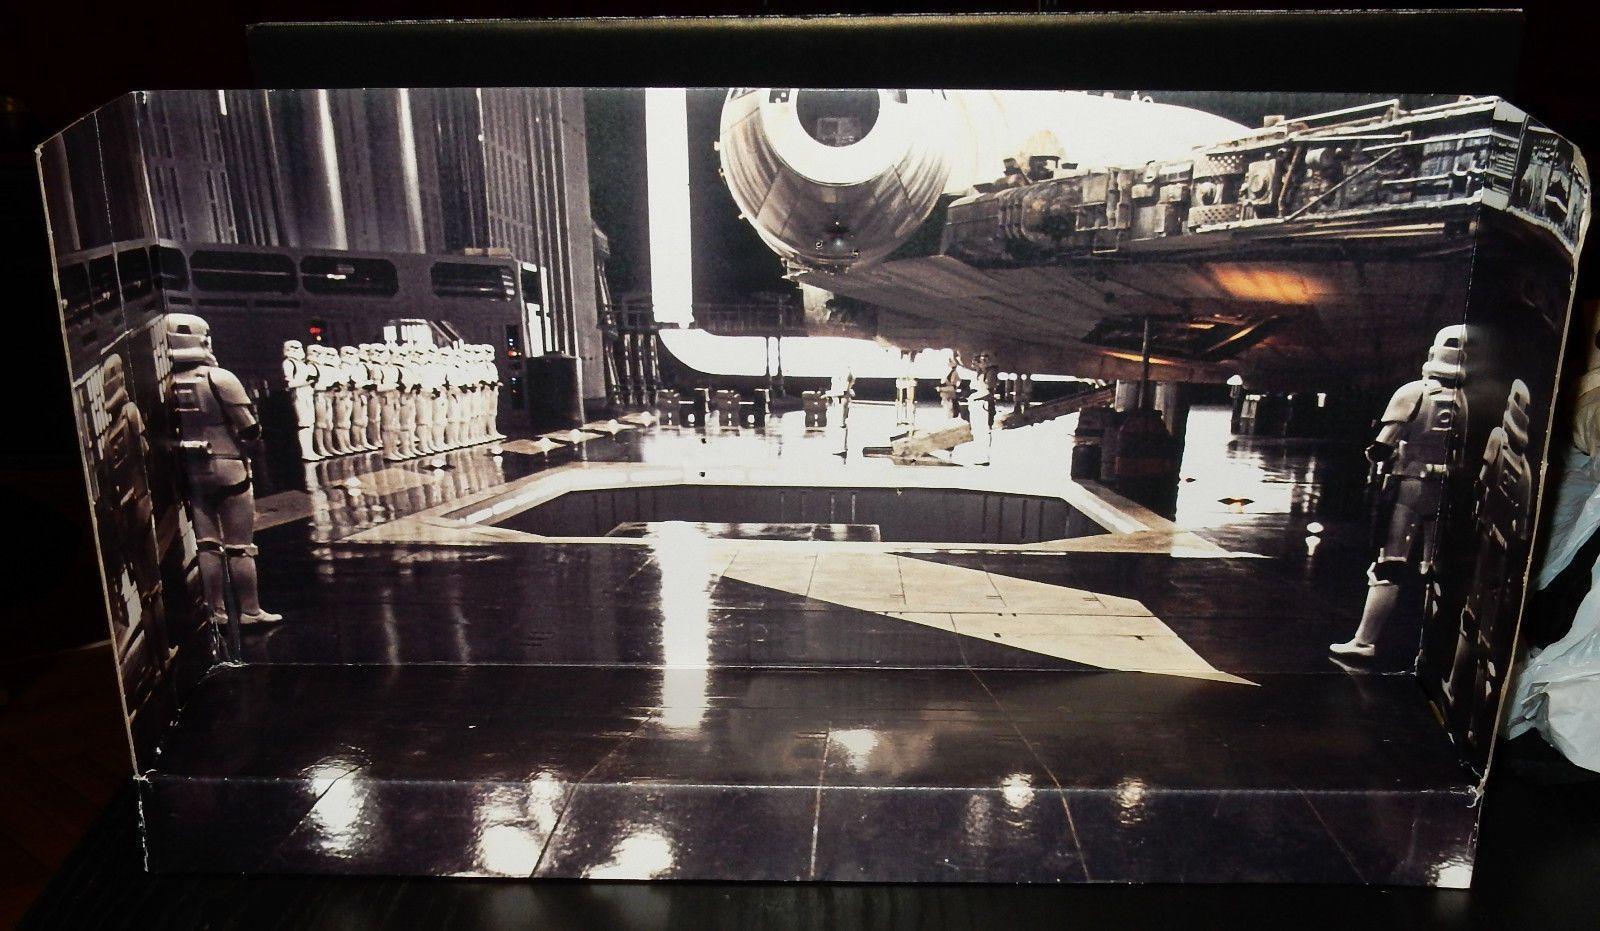 Star wars diorama background image display black series 6 imperial